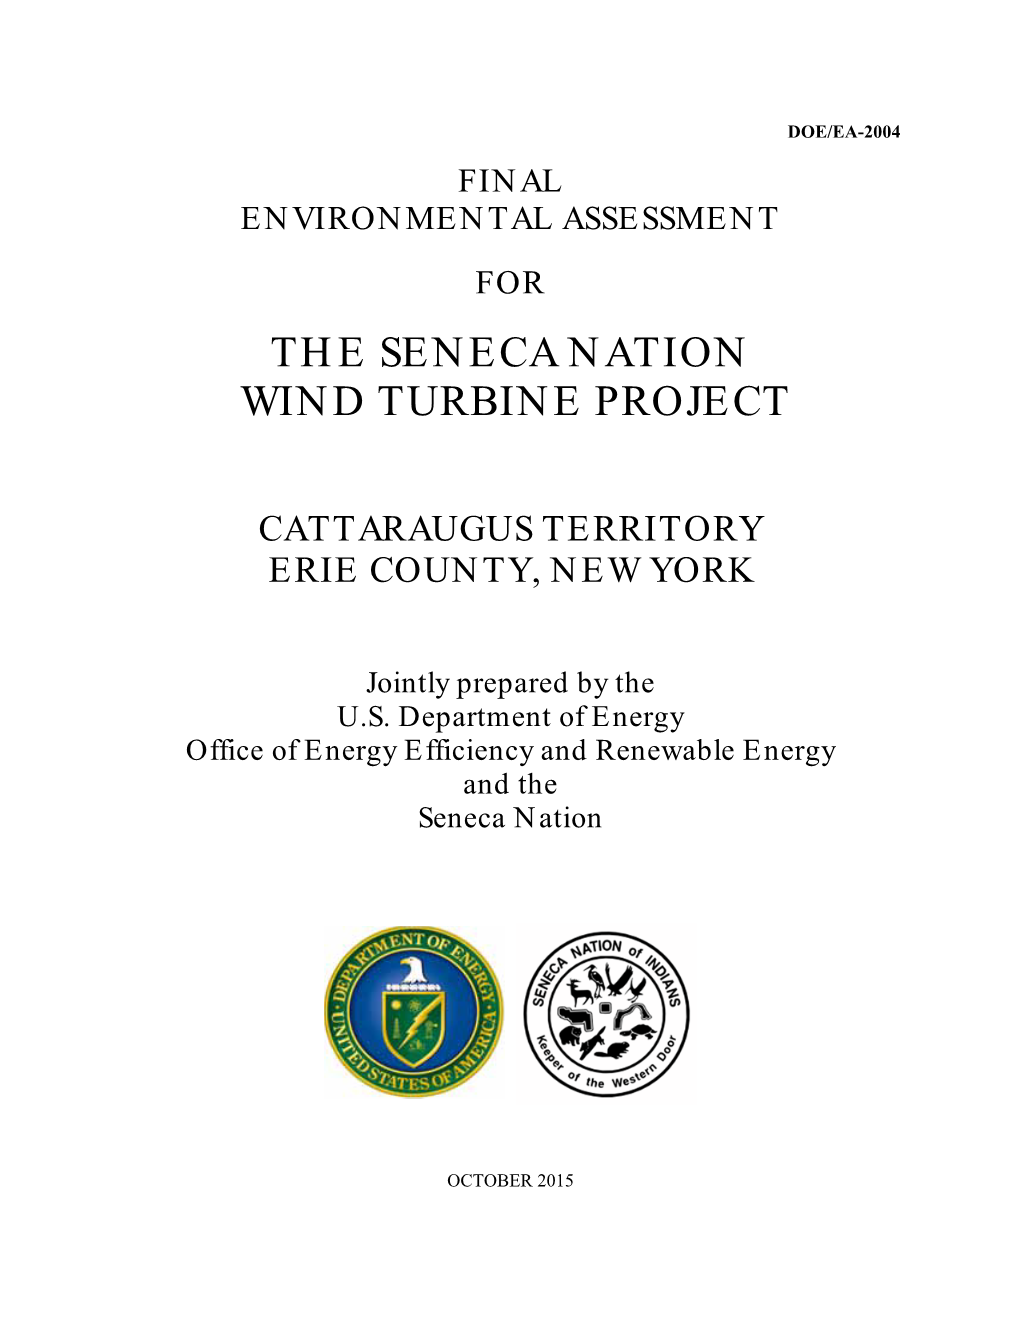 The Seneca Nation Wind Turbine Project